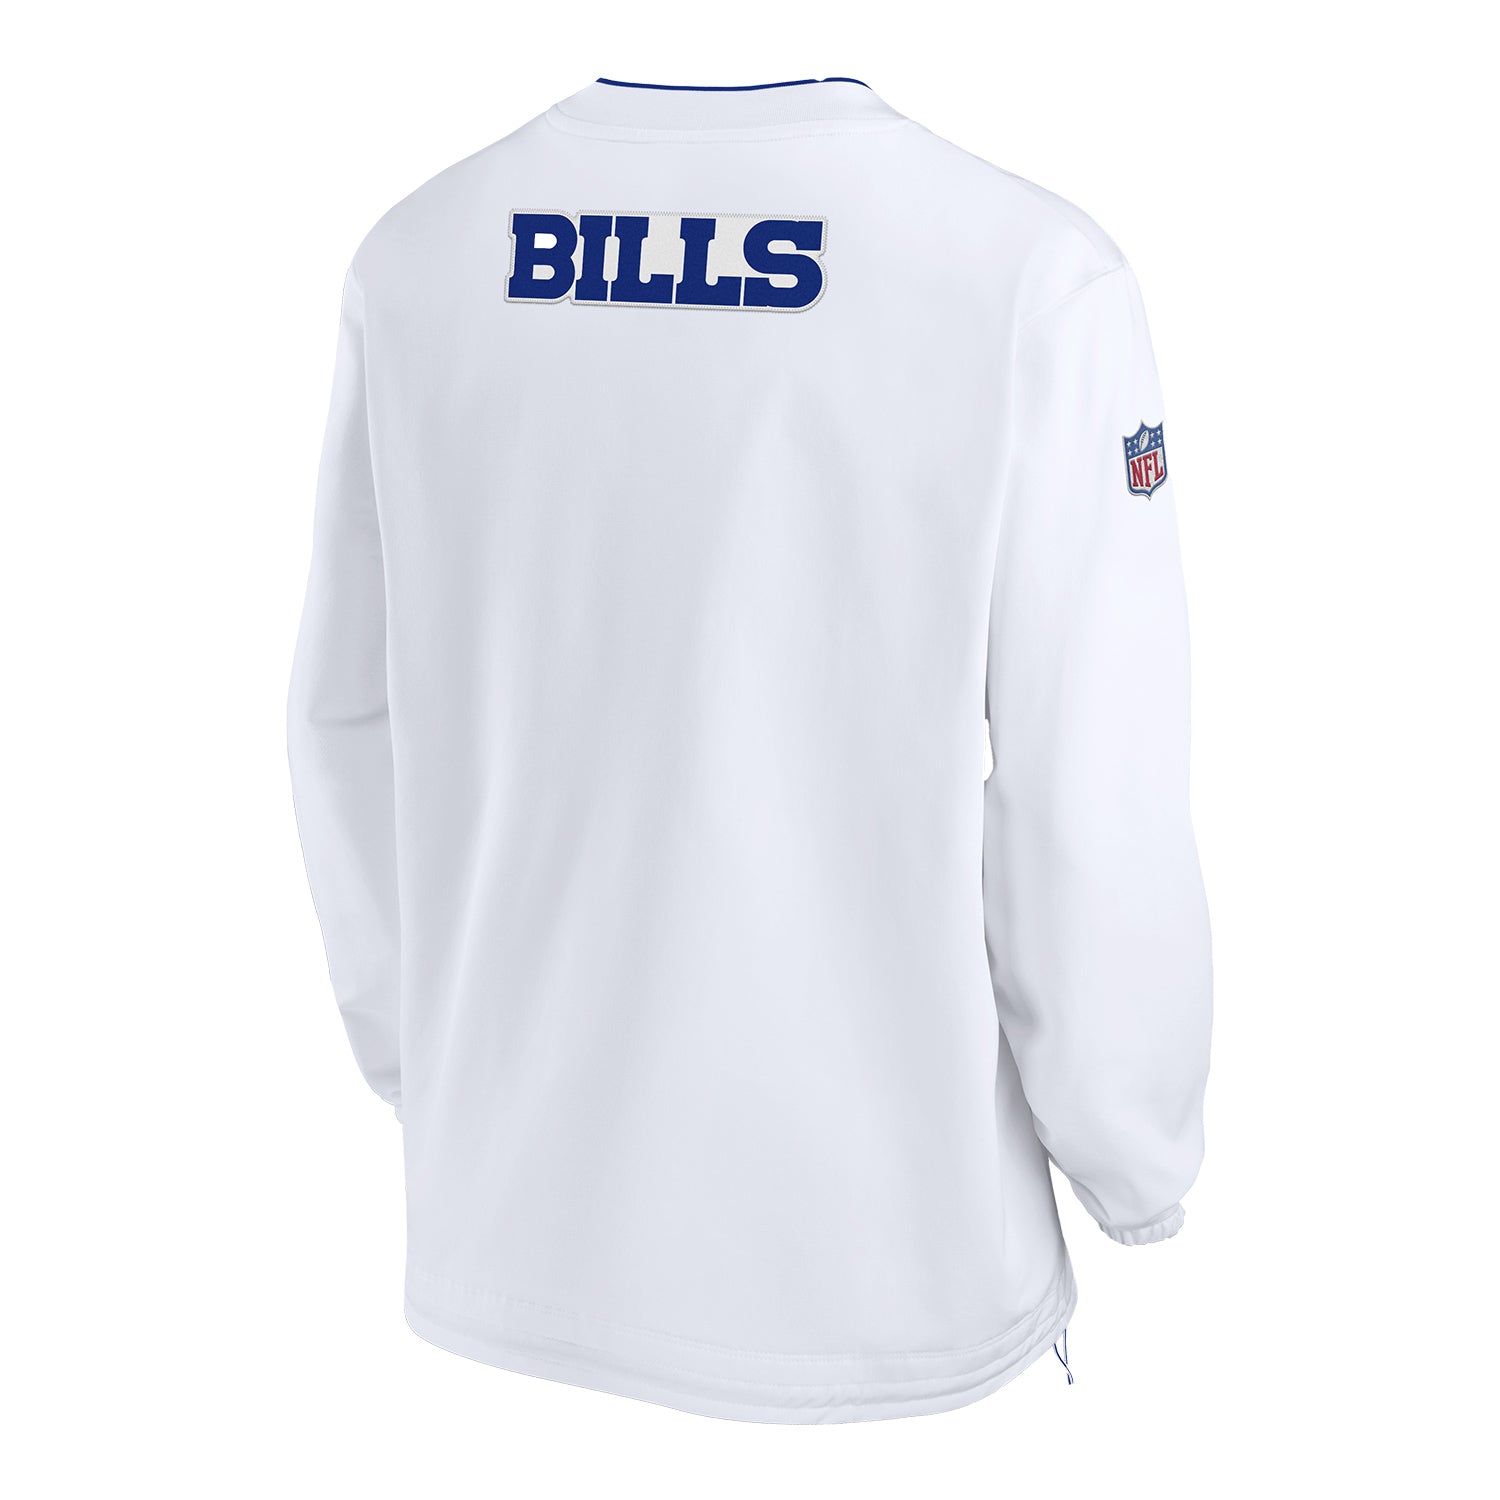 Nike Buffalo Bills Sideline Repel Woven Windshirt Jacket | The Bills Store